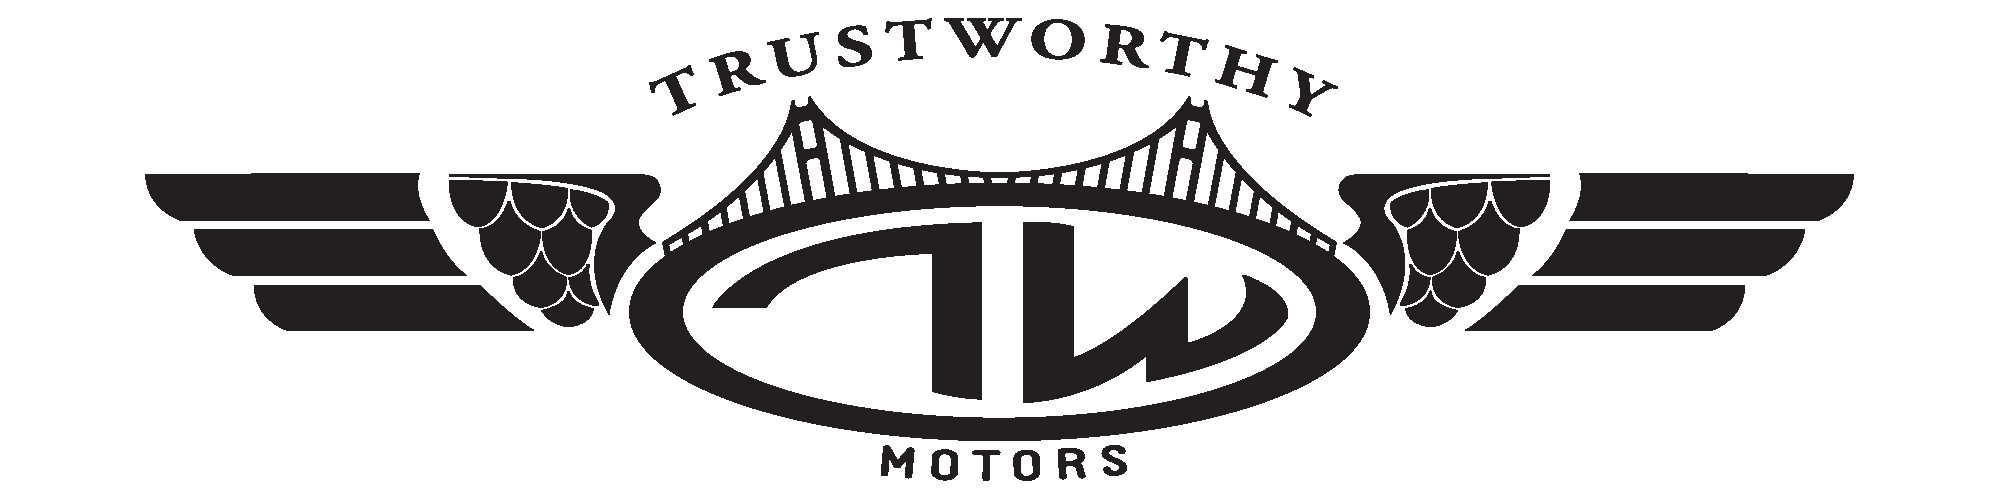 Trustworthy Motors